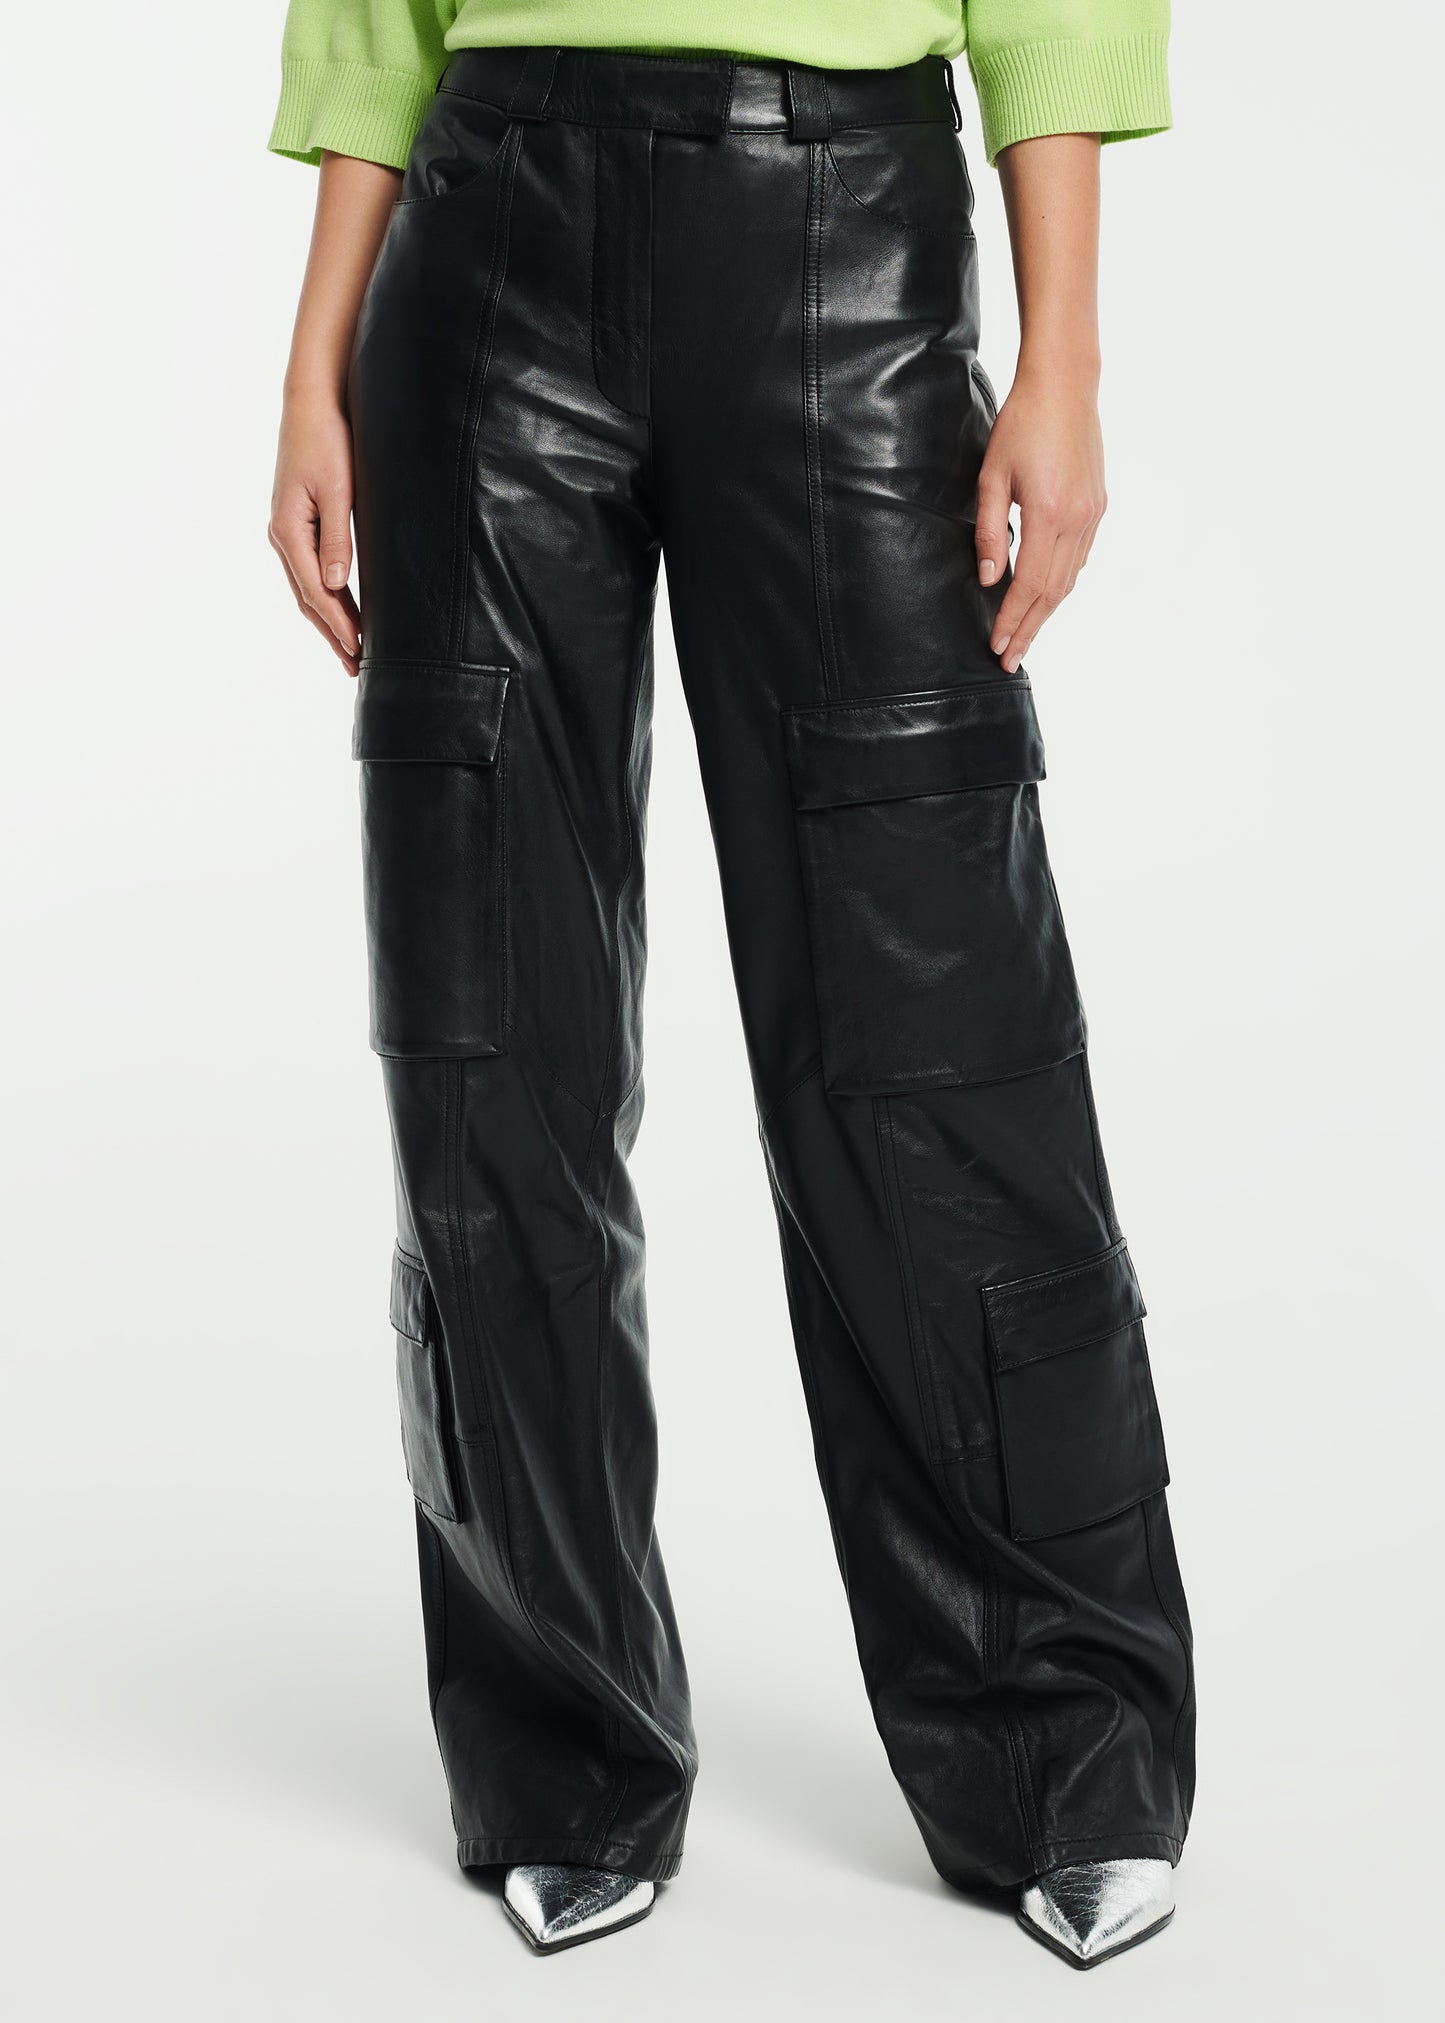 GISELA Leather Cargo Trousers